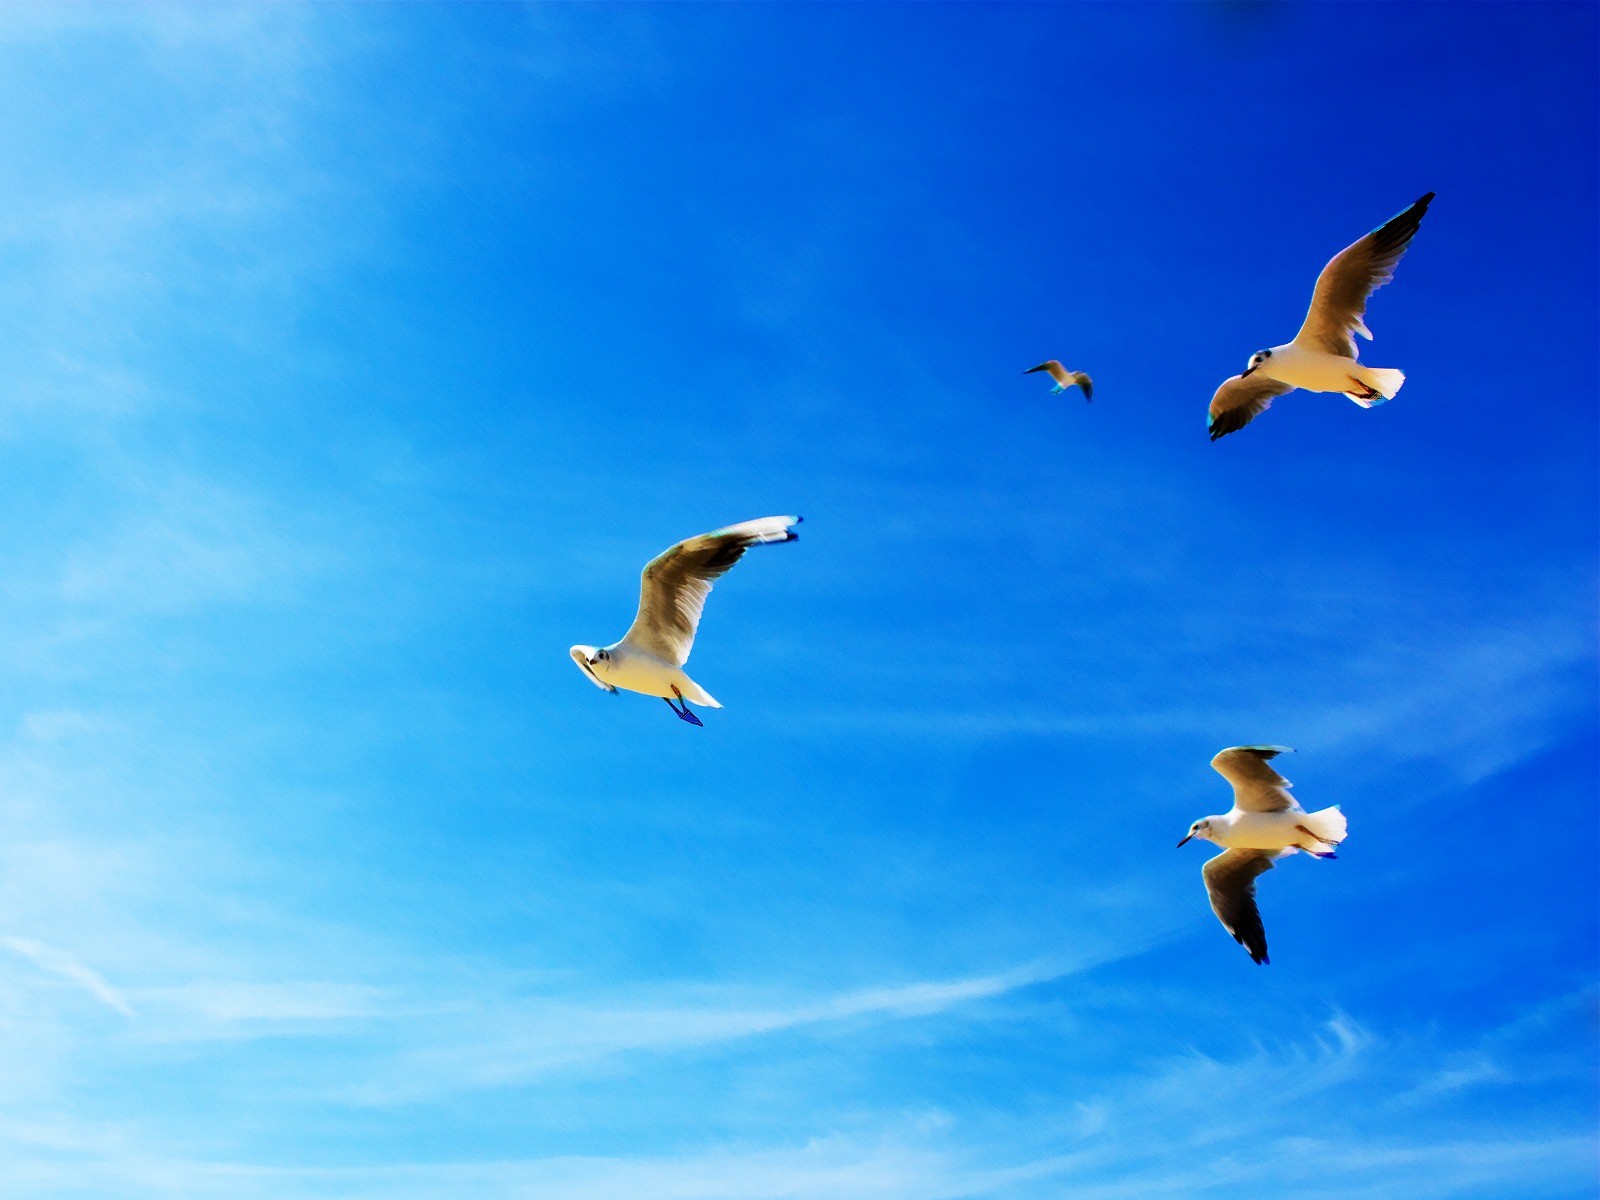 mobile desktop background hd flying parrot pictures